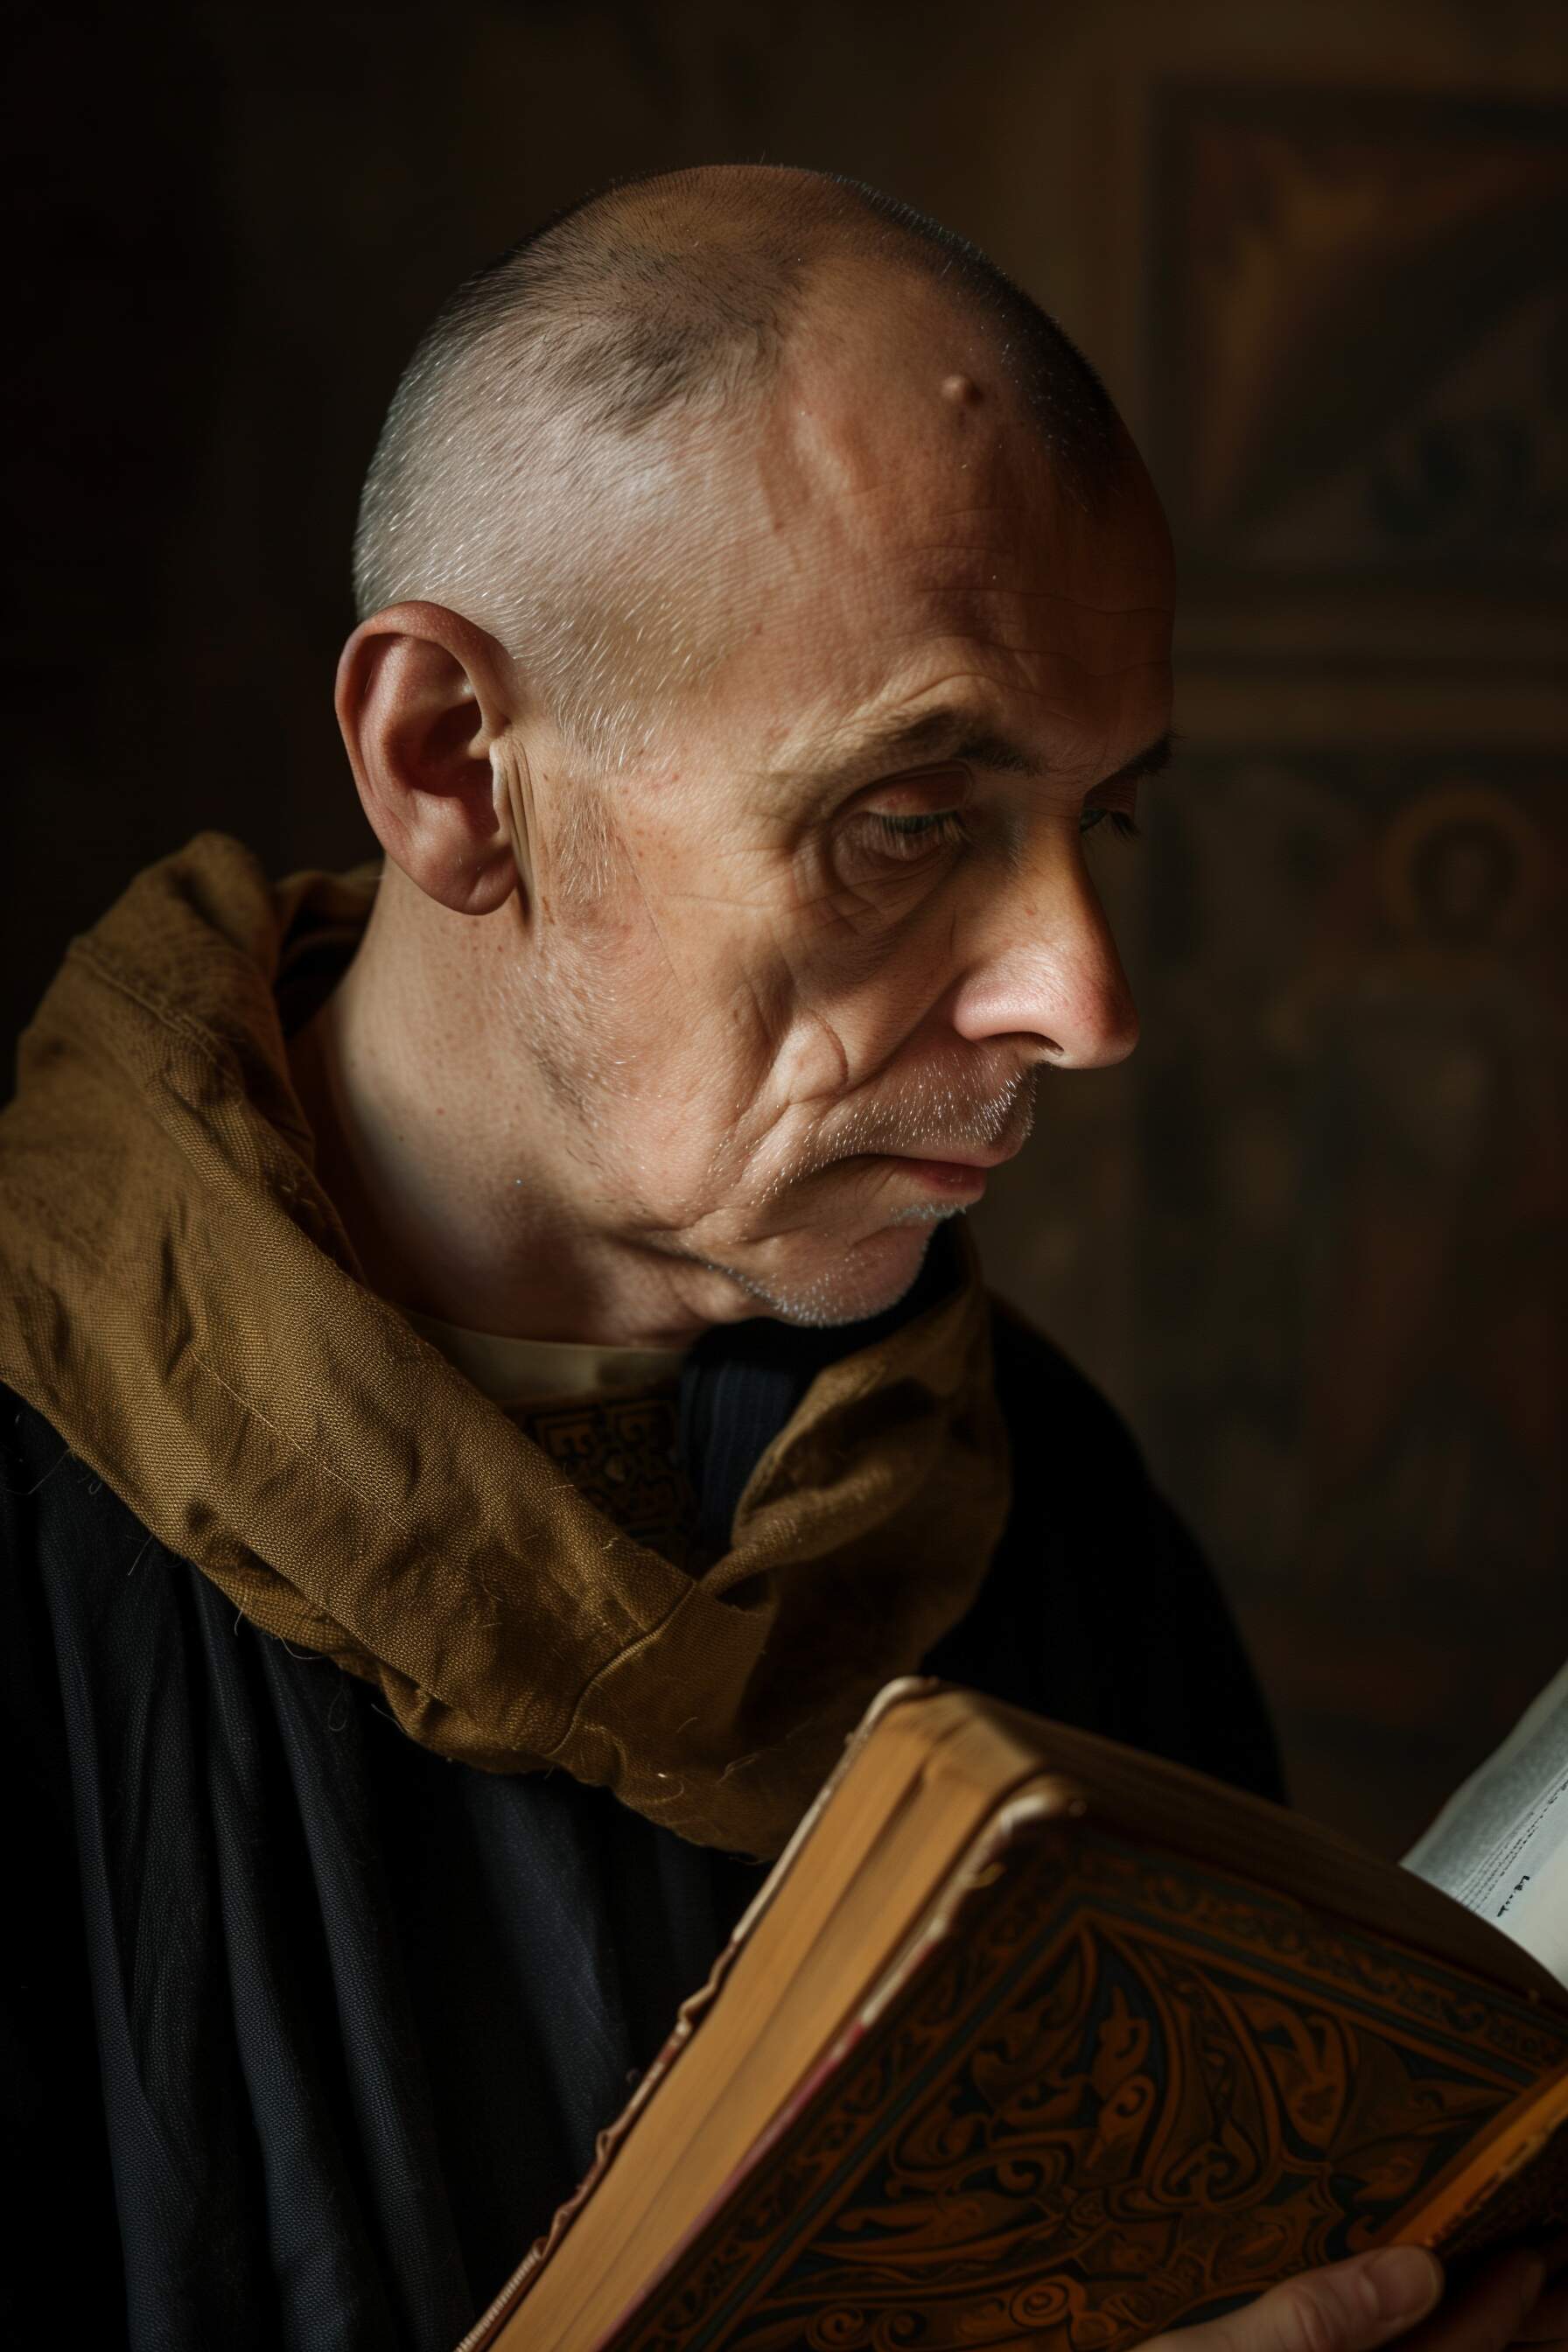 A possible portrait photo of Gildas, the Roman Catholic monk.